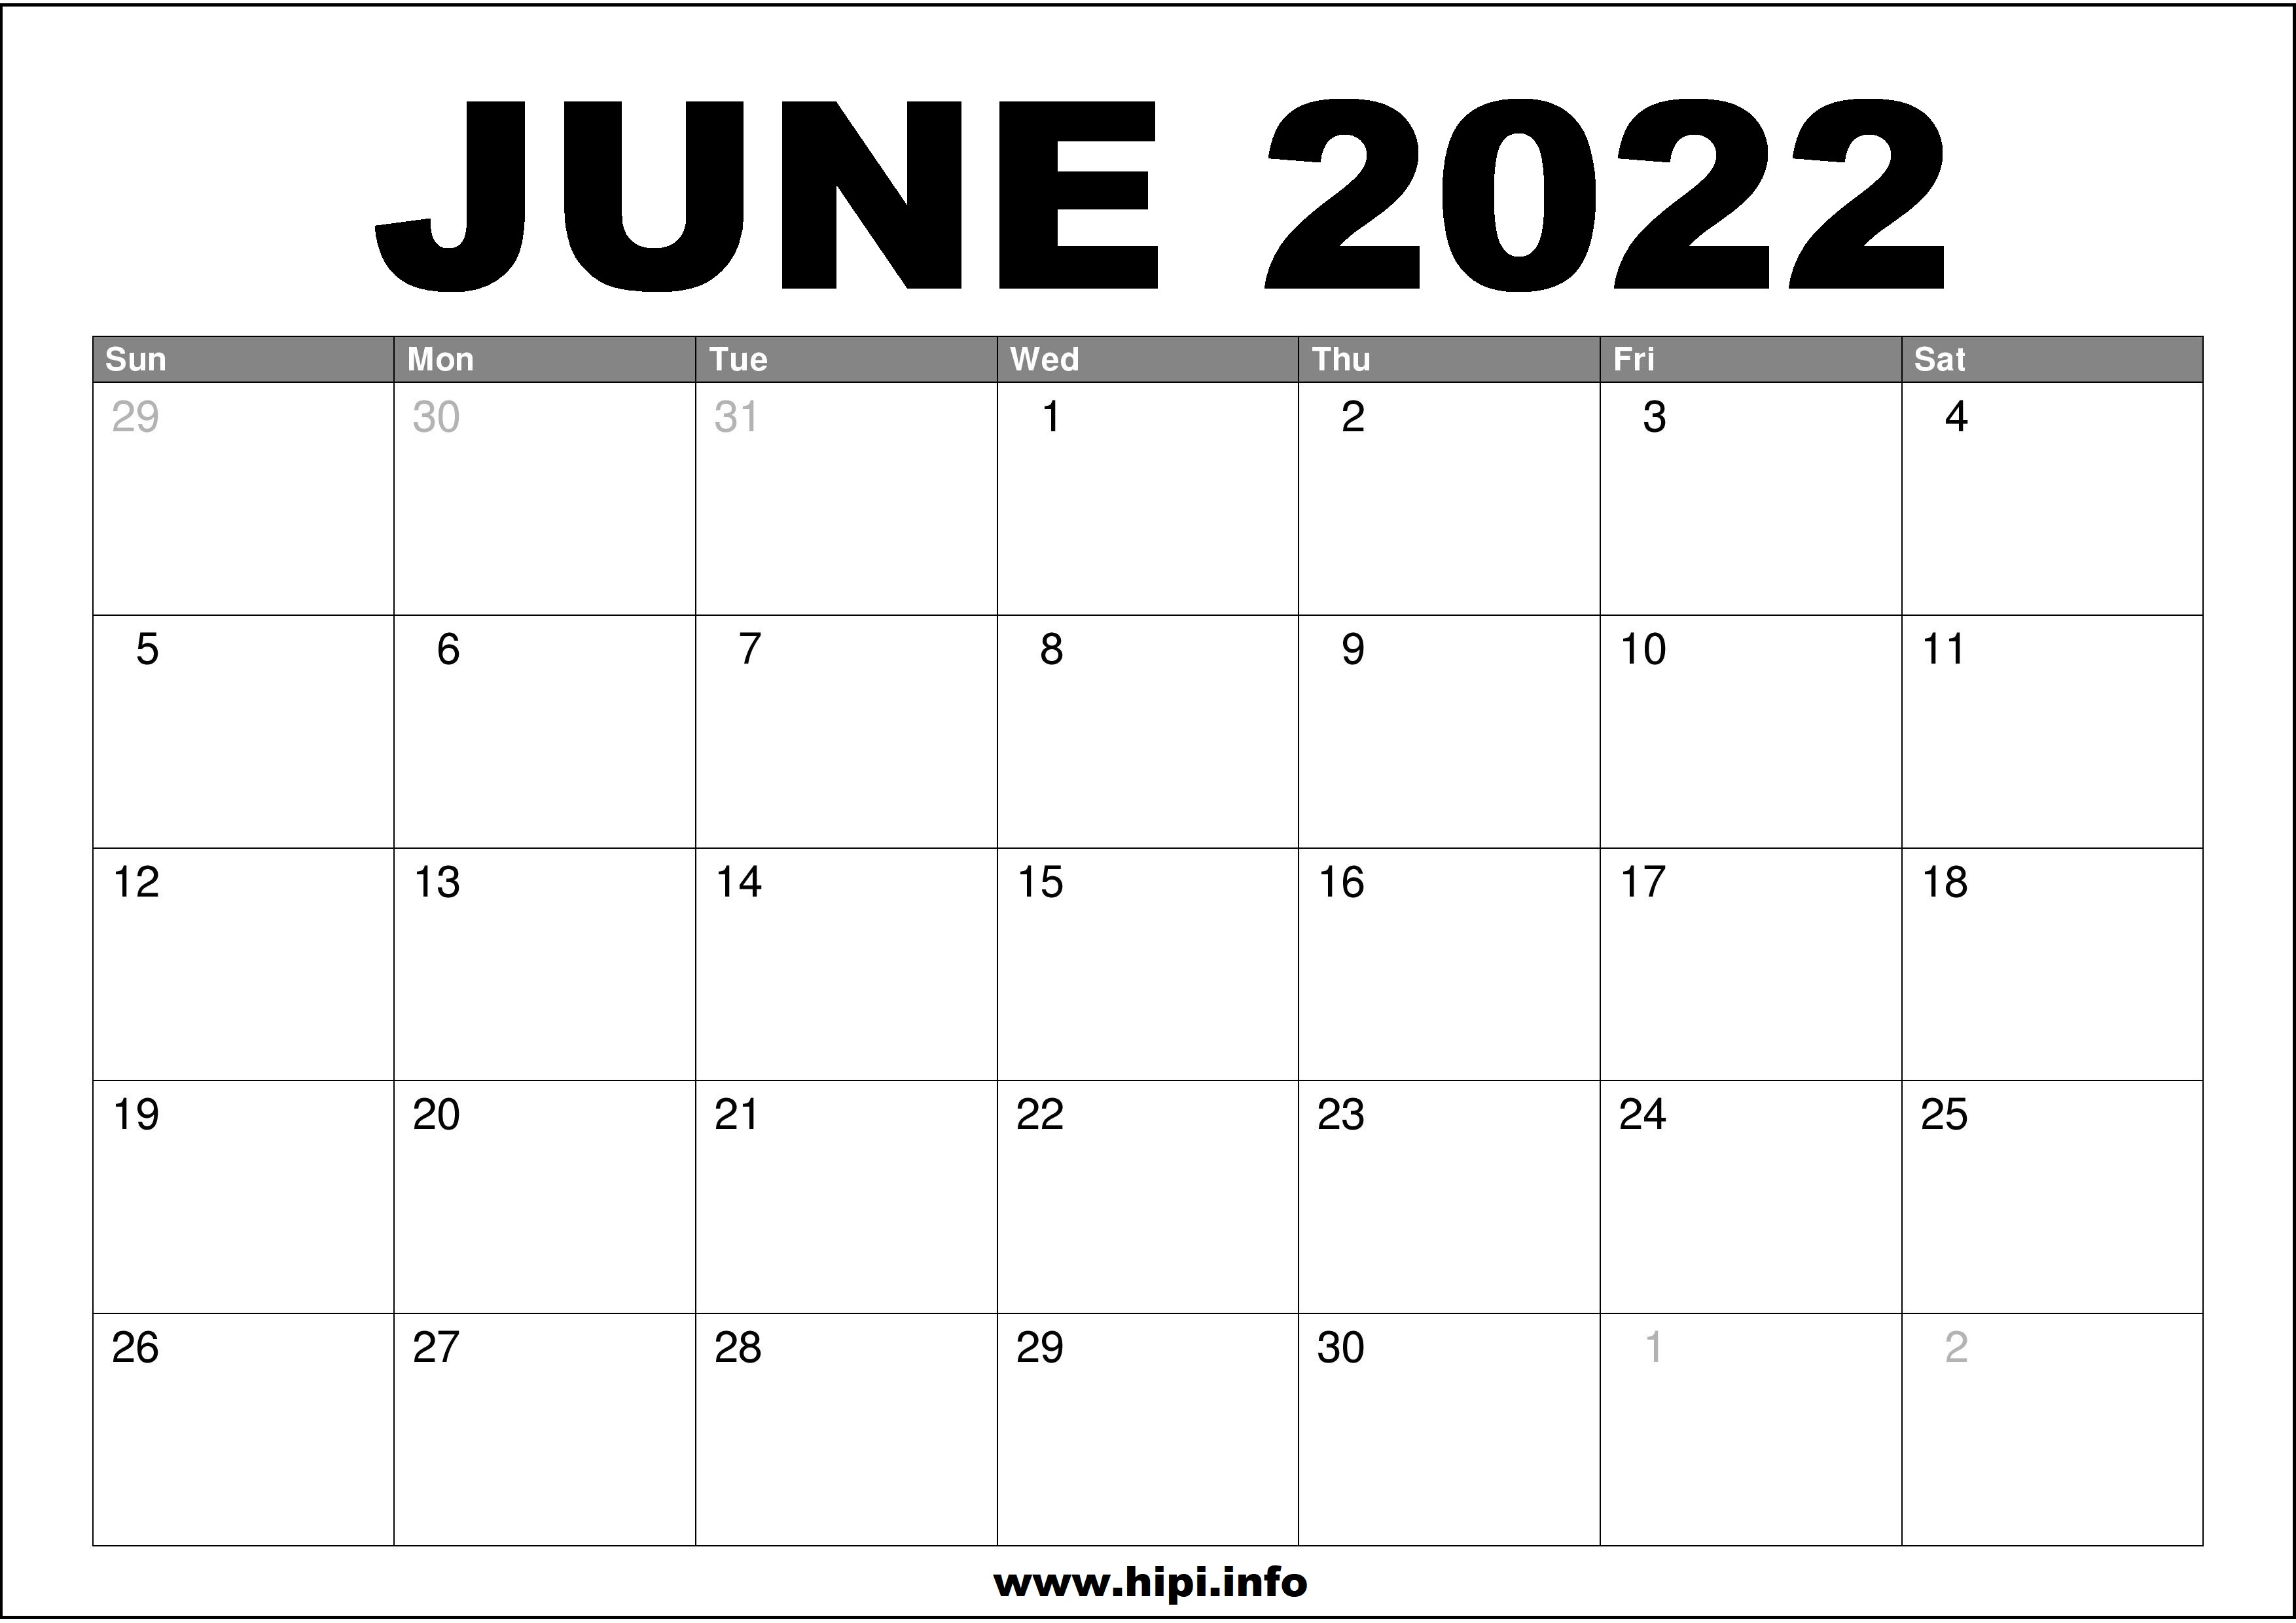 June Monthly Calendar 2022 June 2022 Calendar Printable Free - Hipi.info | Calendars Printable Free